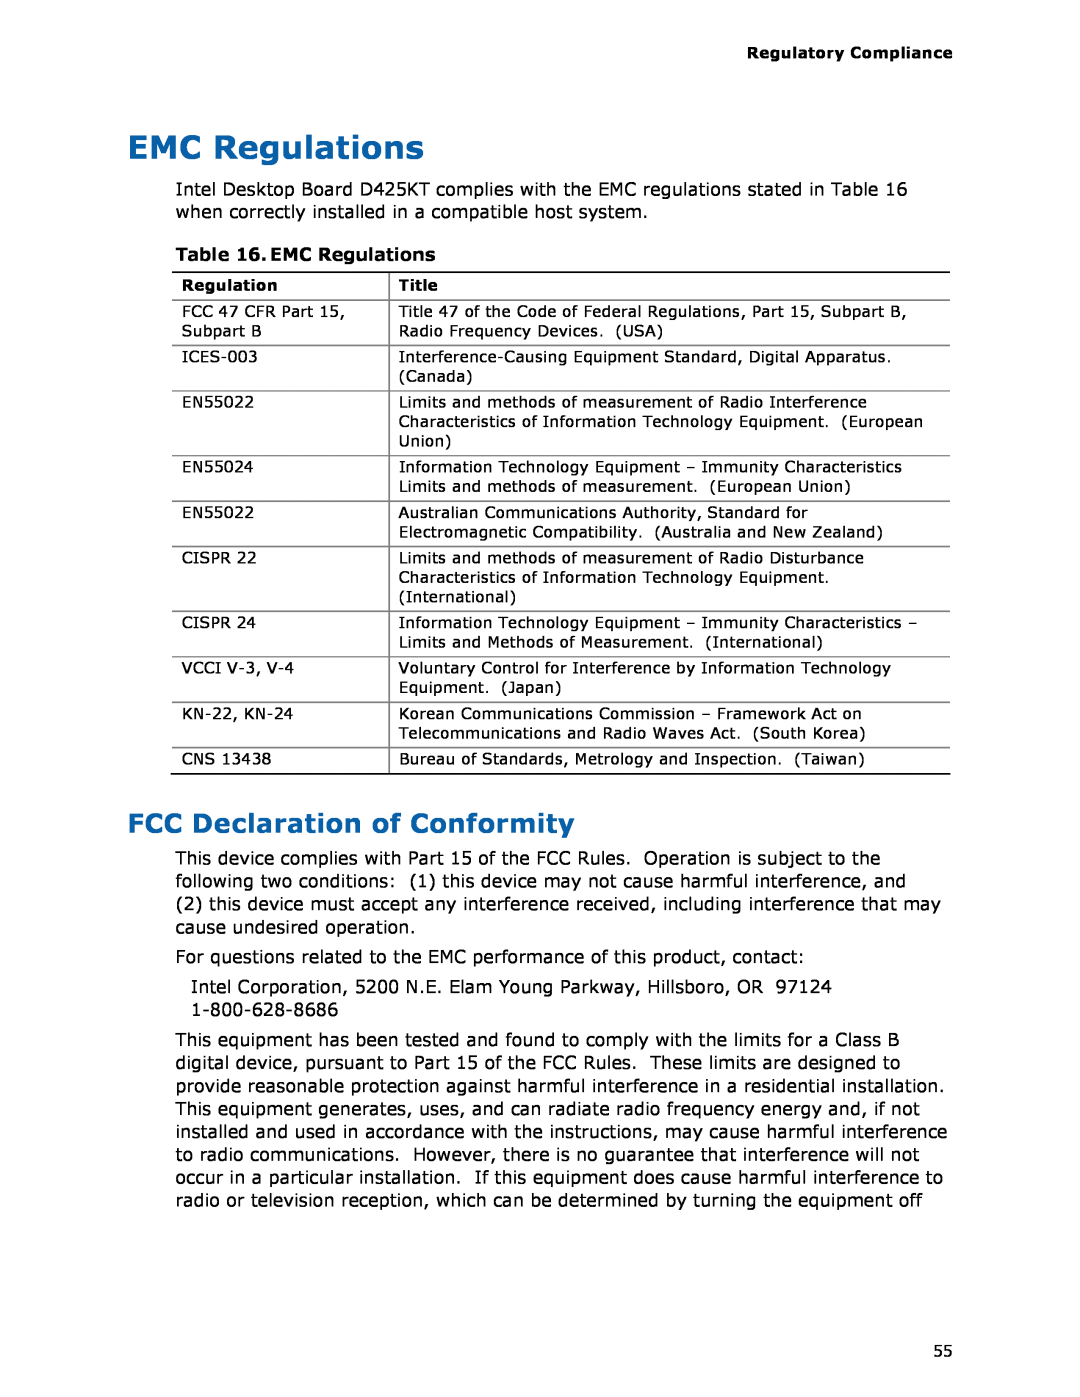 Intel D425KT manual EMC Regulations, FCC Declaration of Conformity 